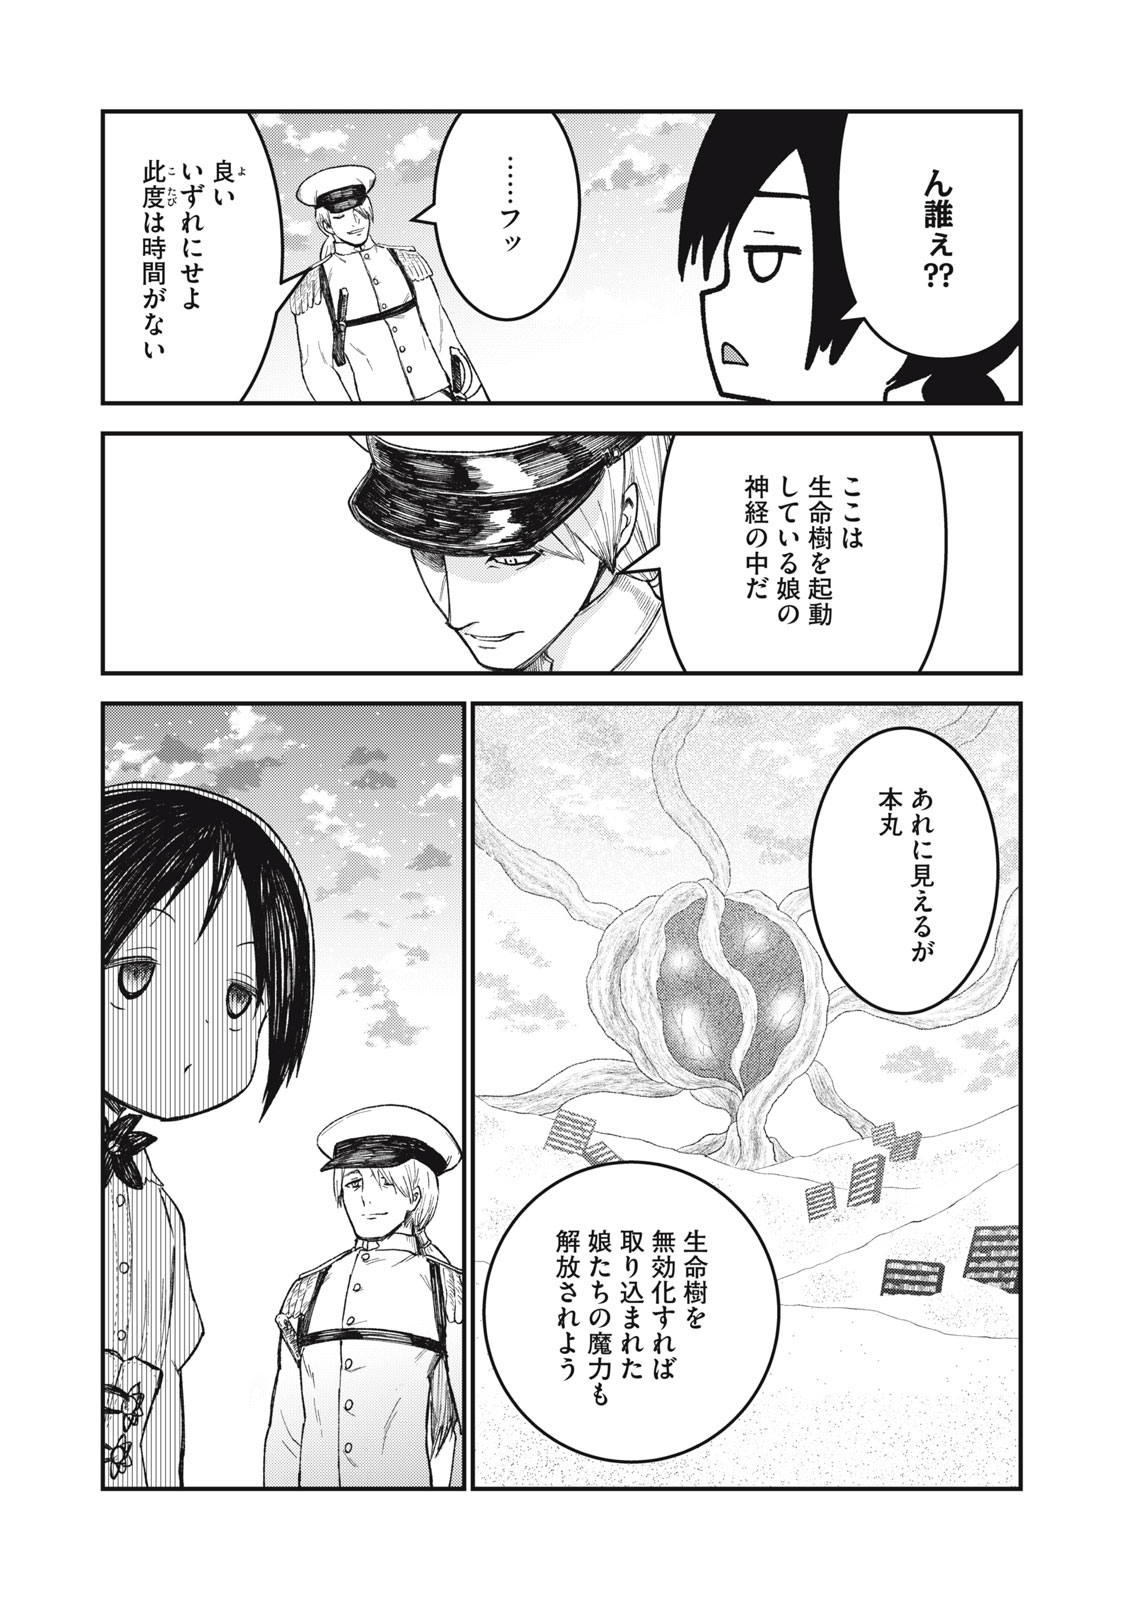 Itadaki no Lvitsa - Chapter 14 - Page 3